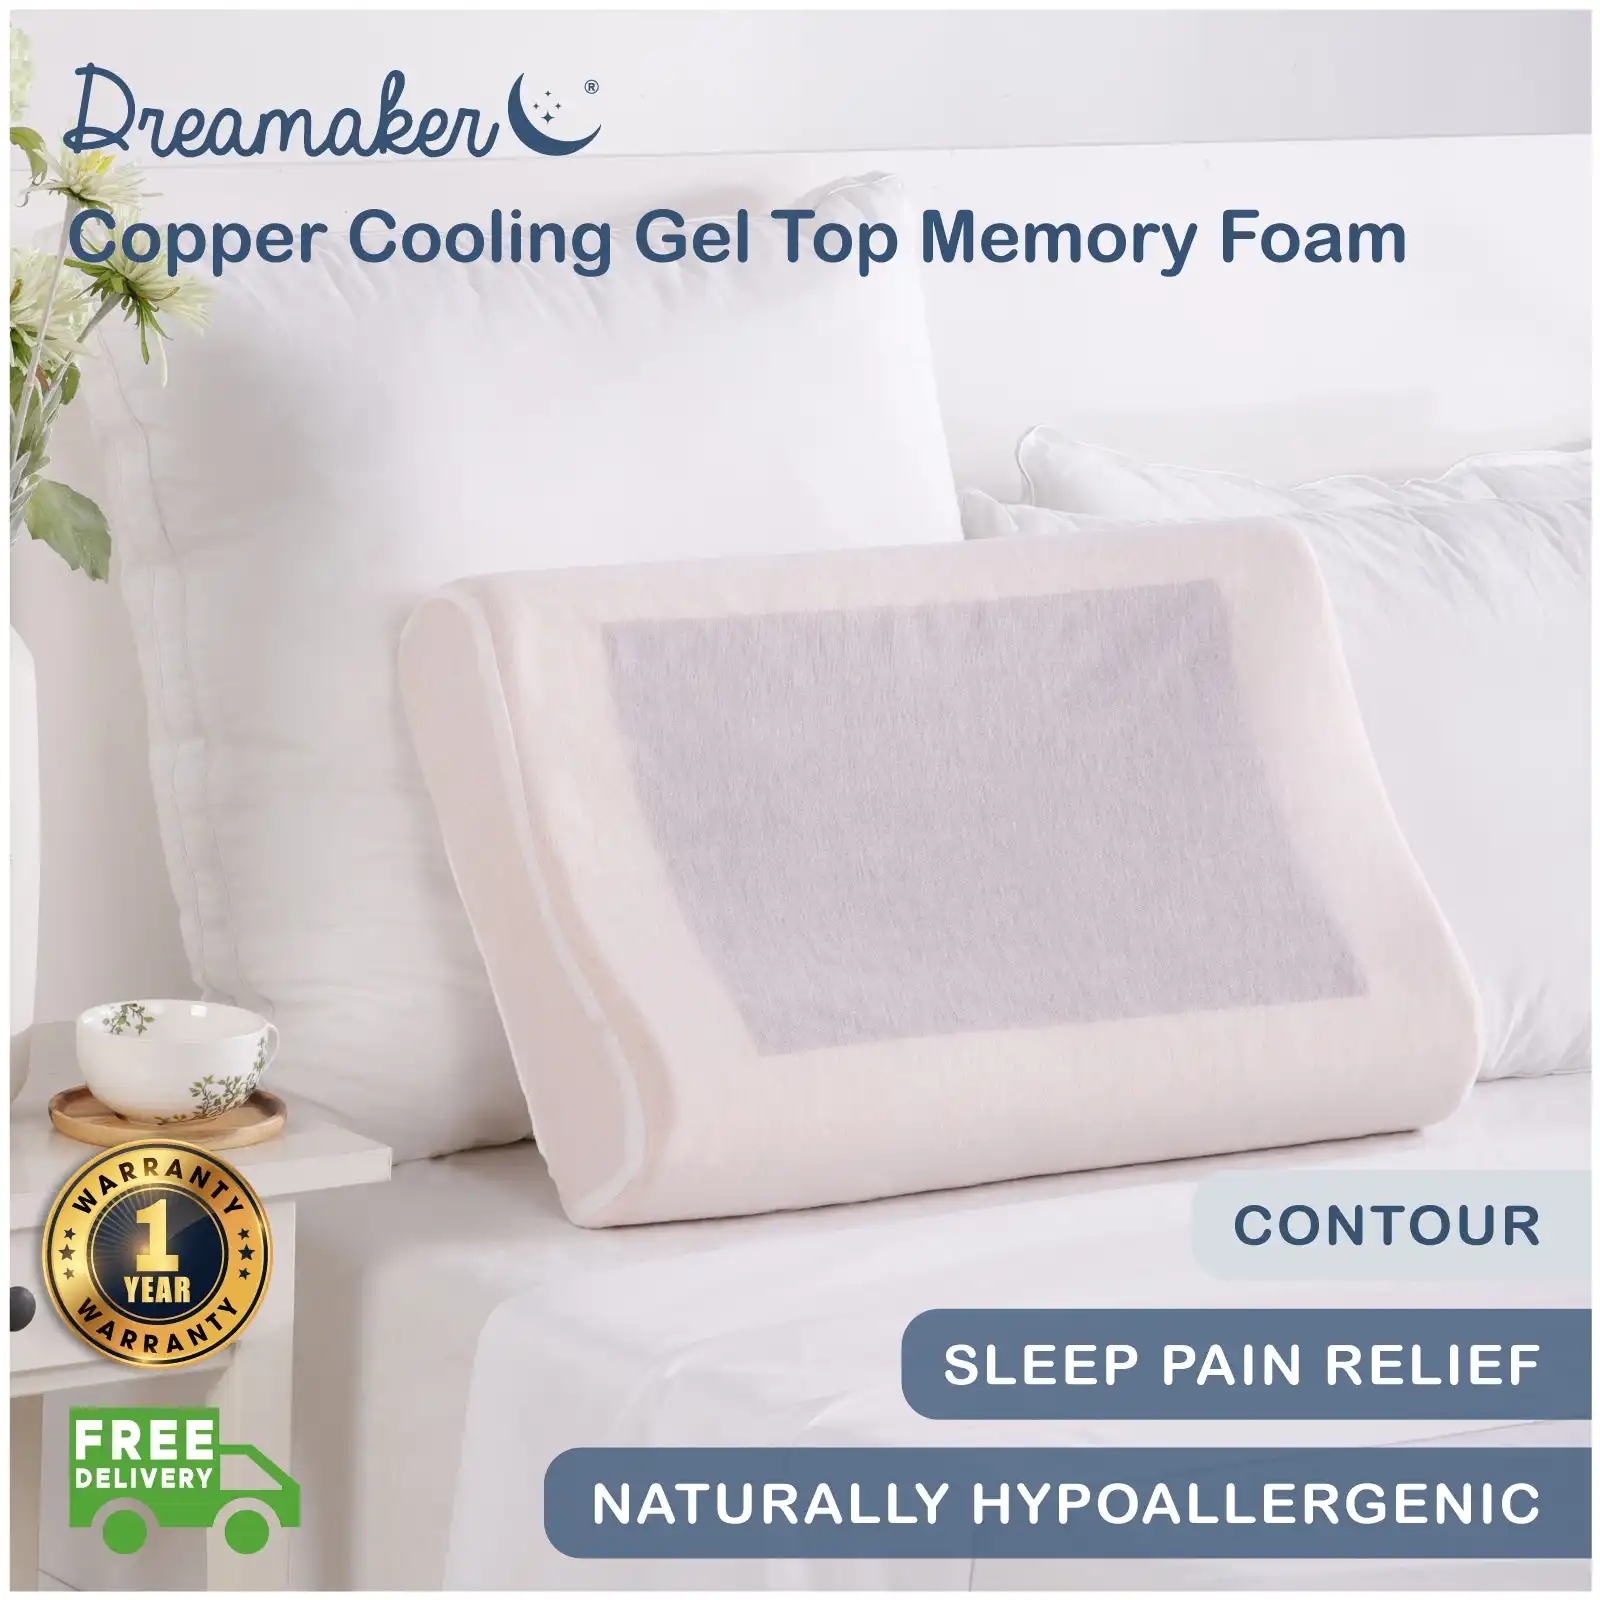 Dreamaker Copper Cooling Gel Top Memory Foam Pillow Contour